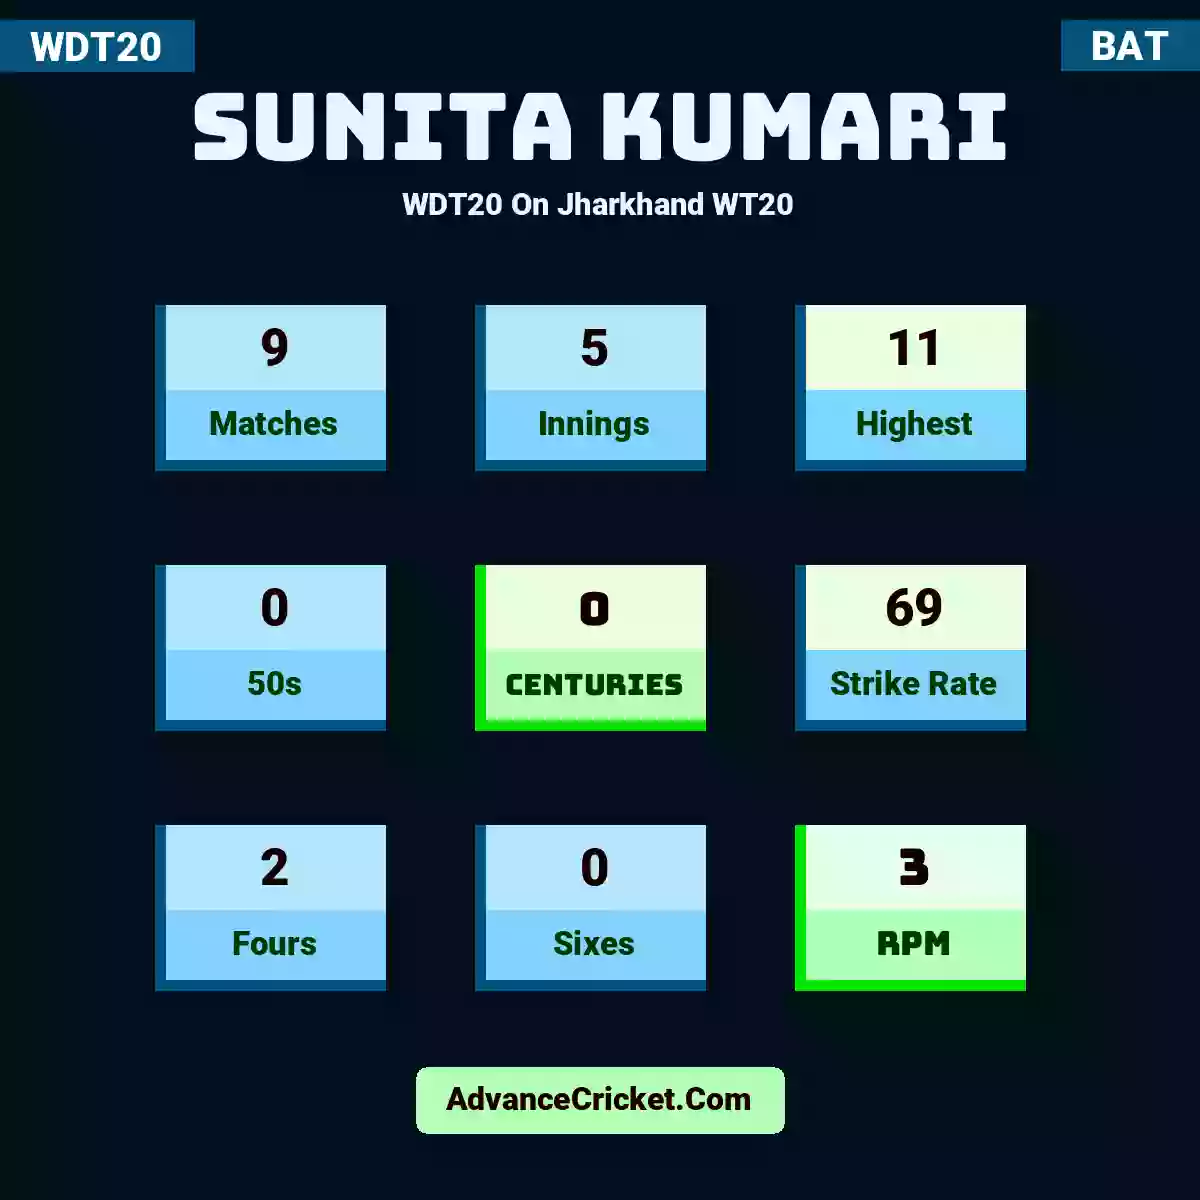 Sunita Kumari WDT20  On Jharkhand WT20, Sunita Kumari played 9 matches, scored 11 runs as highest, 0 half-centuries, and 0 centuries, with a strike rate of 69. S.Kumari hit 2 fours and 0 sixes, with an RPM of 3.